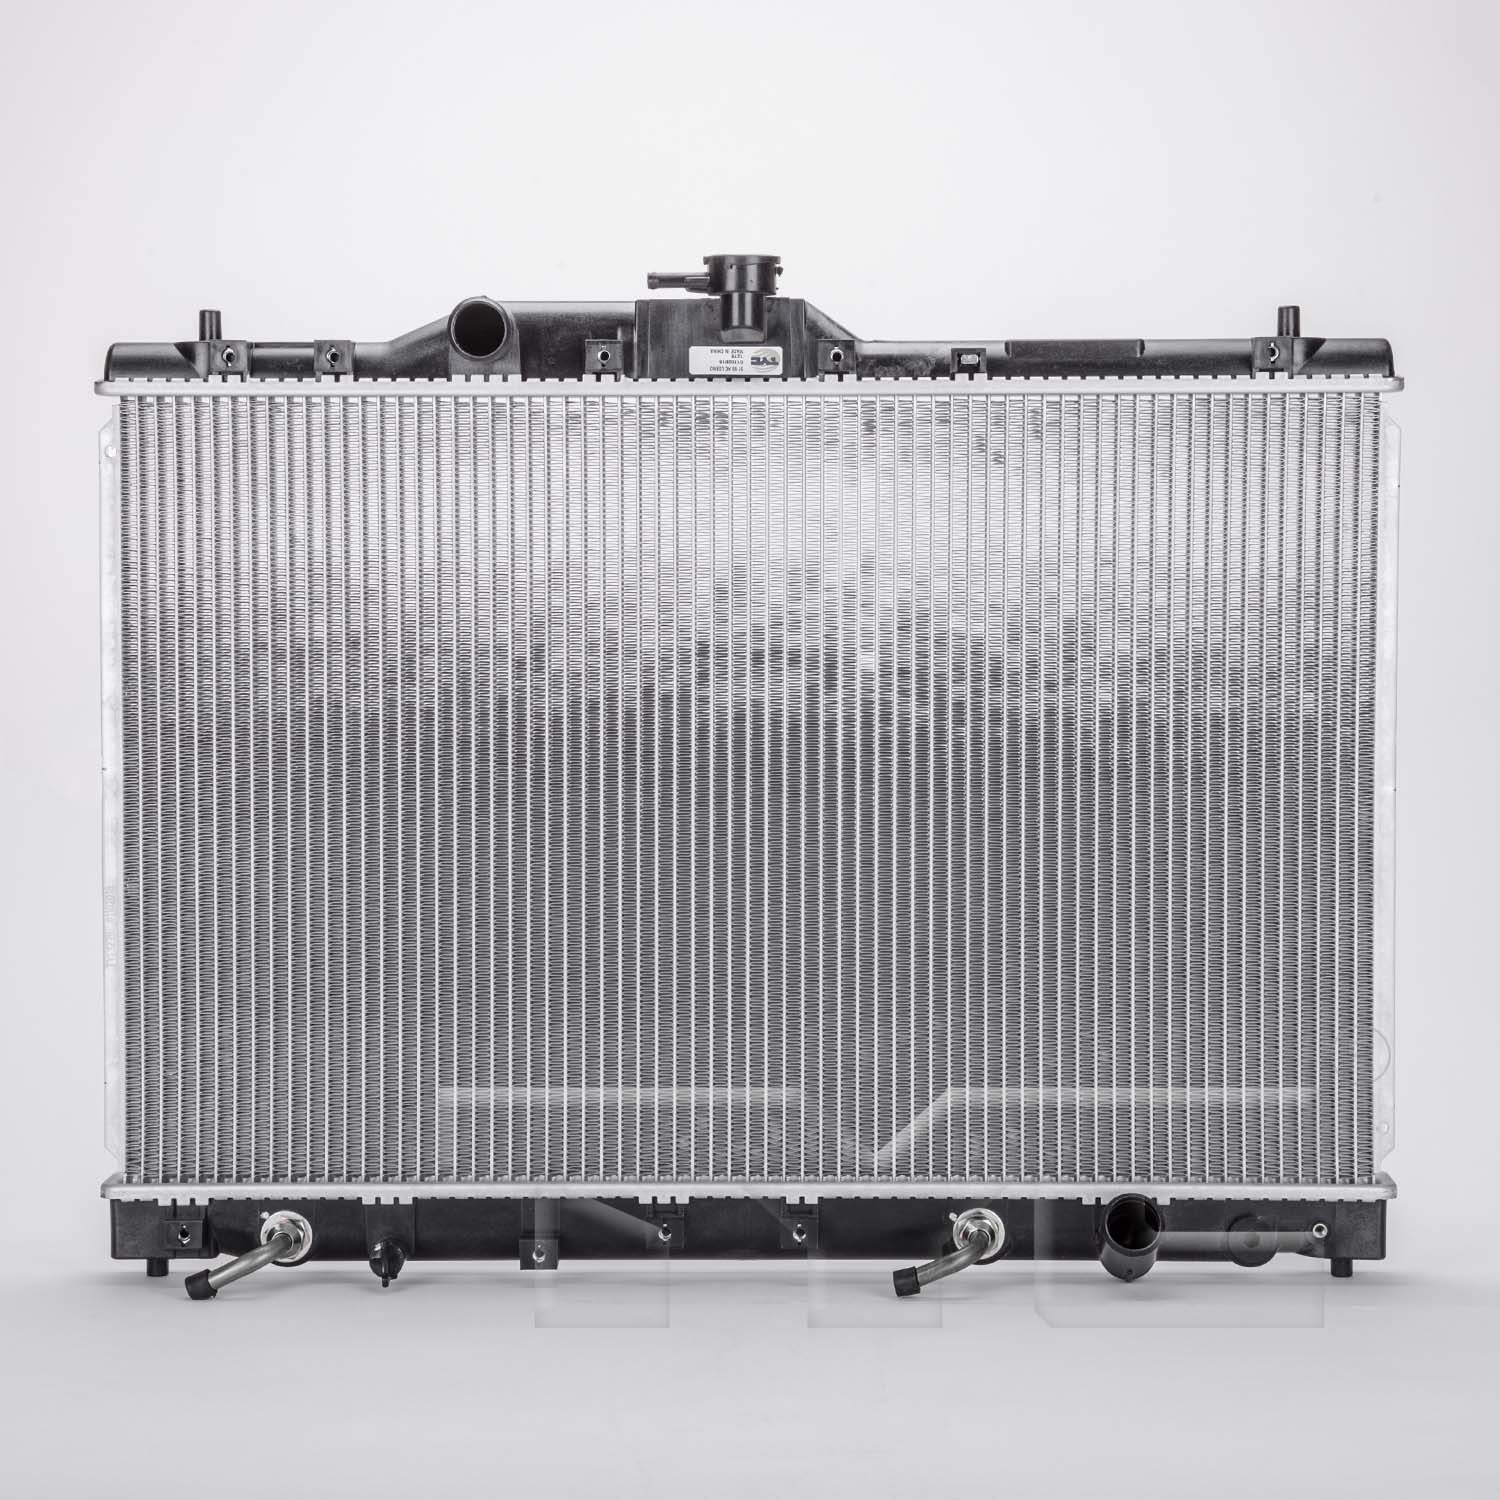 Aftermarket RADIATORS for ACURA - LEGEND, LEGEND,91-95,Radiator assembly